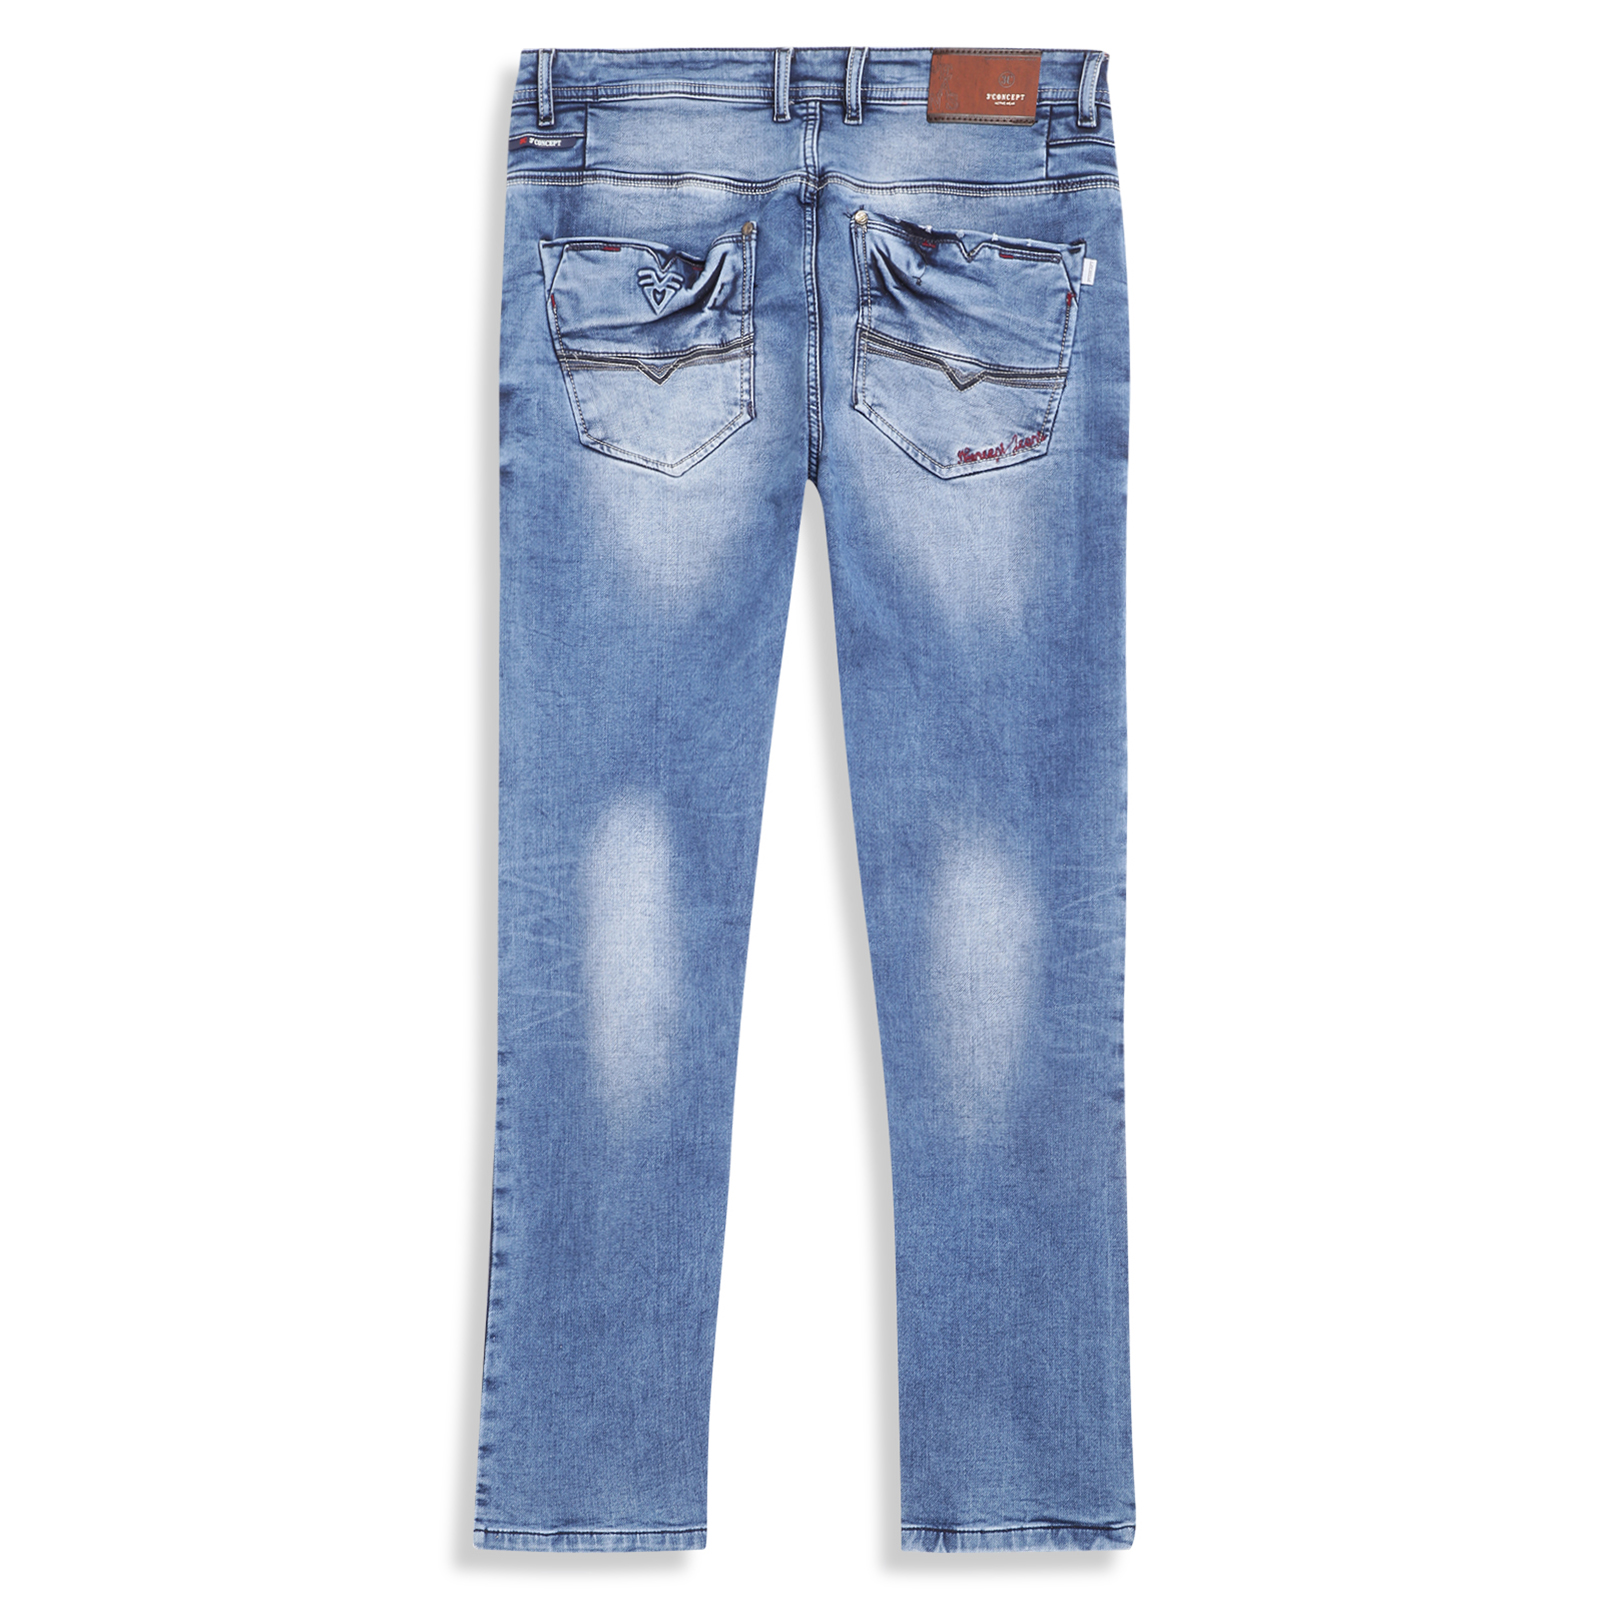 Cheap Plus Size Ripped Jeans Women Lace Up High Waist Loose Denim Jeans  Vintage Casual Harem Pants Jean  Joom